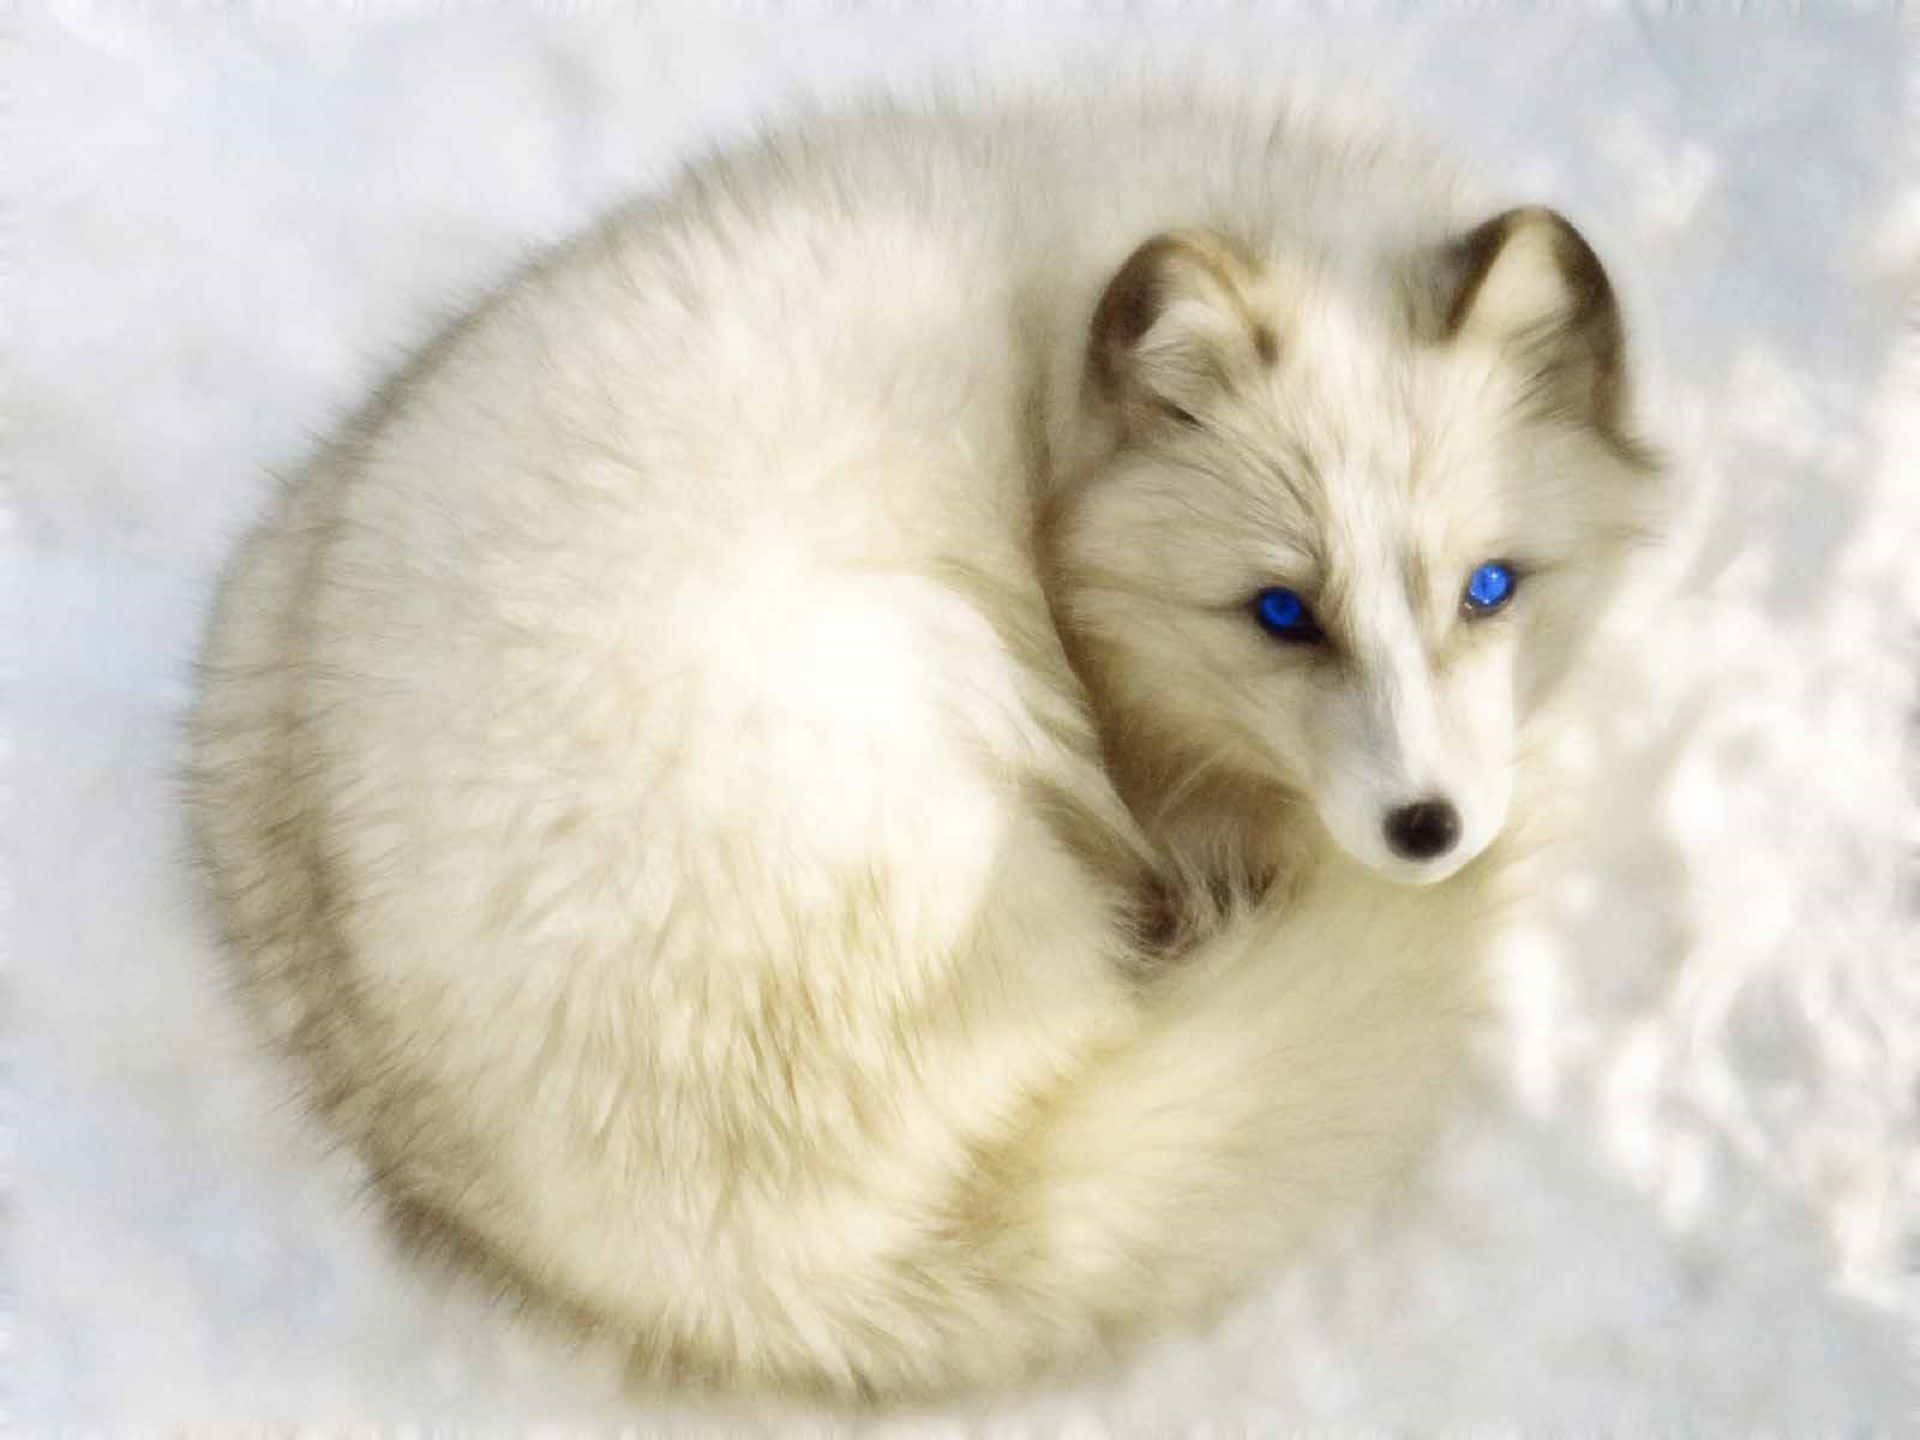 Beauty of Arctic Tundra: A Closeup Look At An Arctic Fox